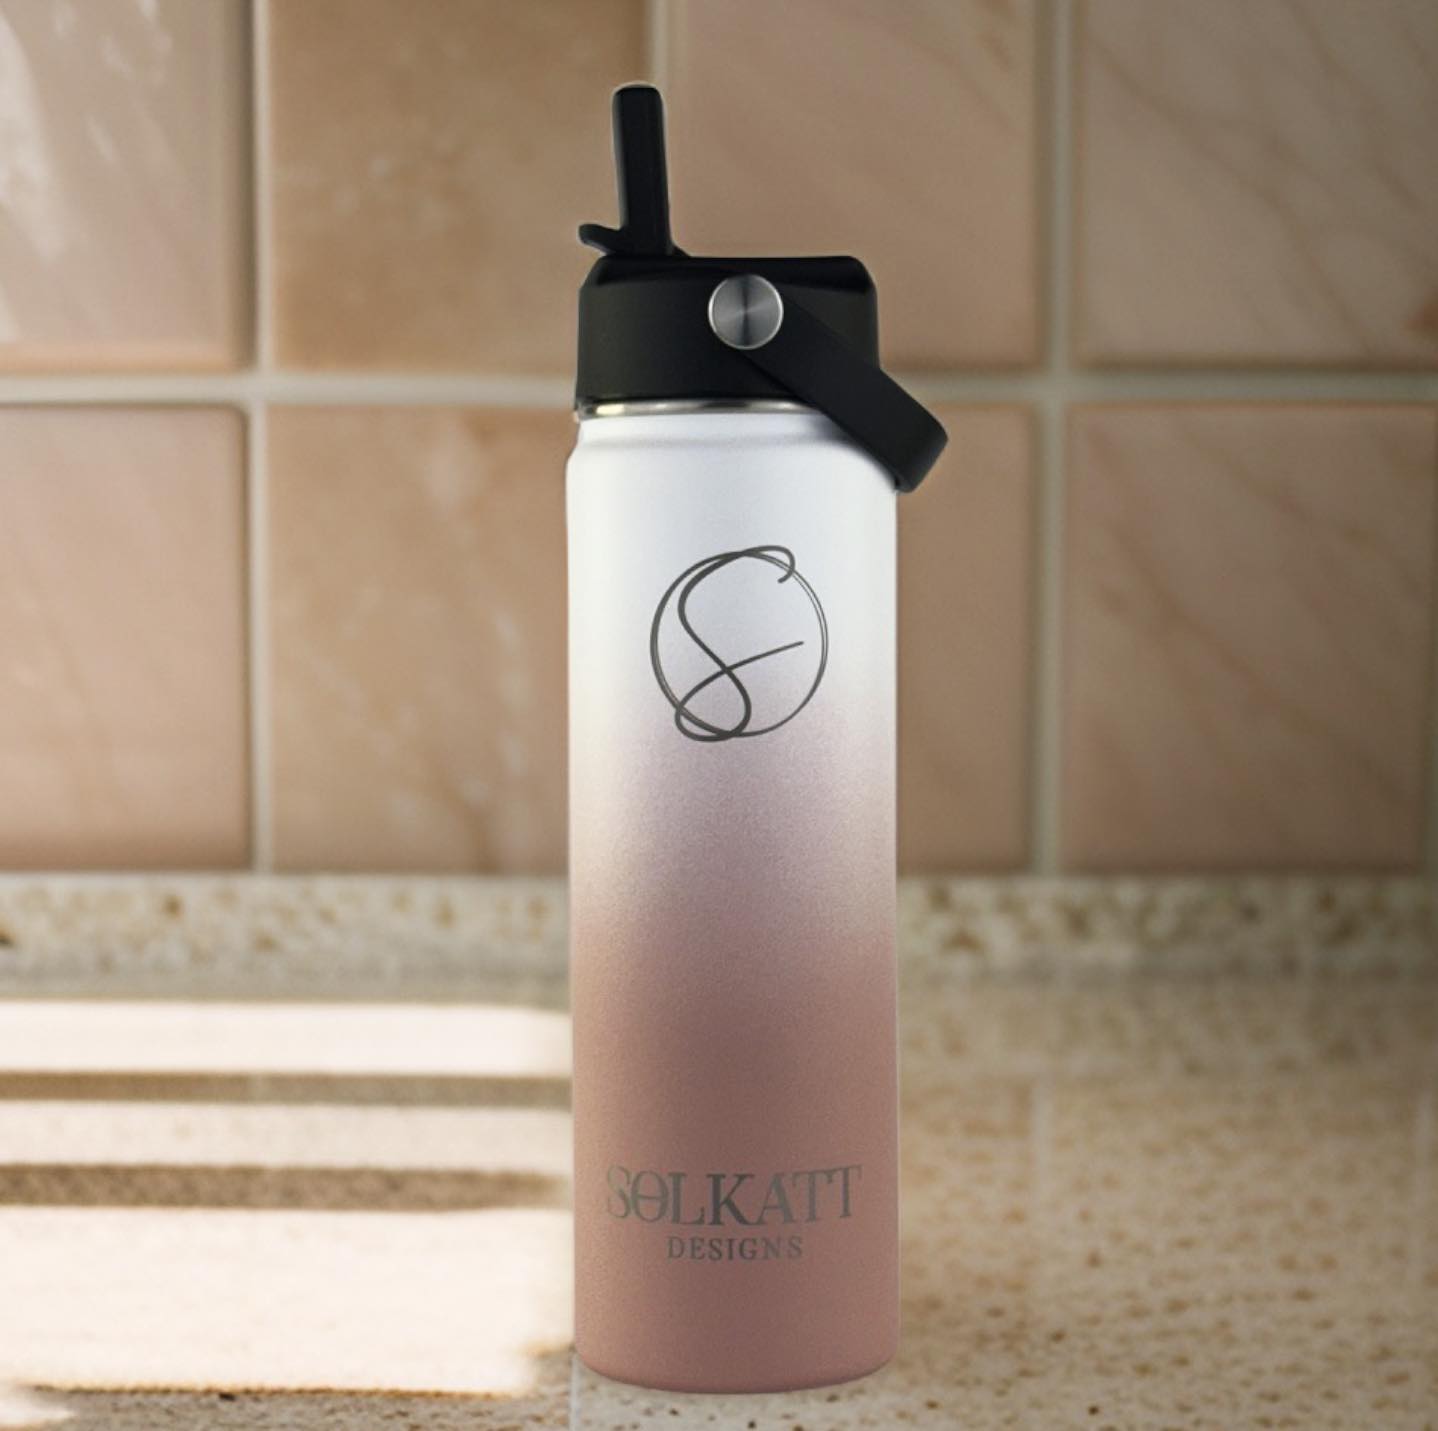 Musk Essence (Soft Pink) 650ml / 22oz Stainless Steel Insulated Drink Bottle - Solkatt Designs 